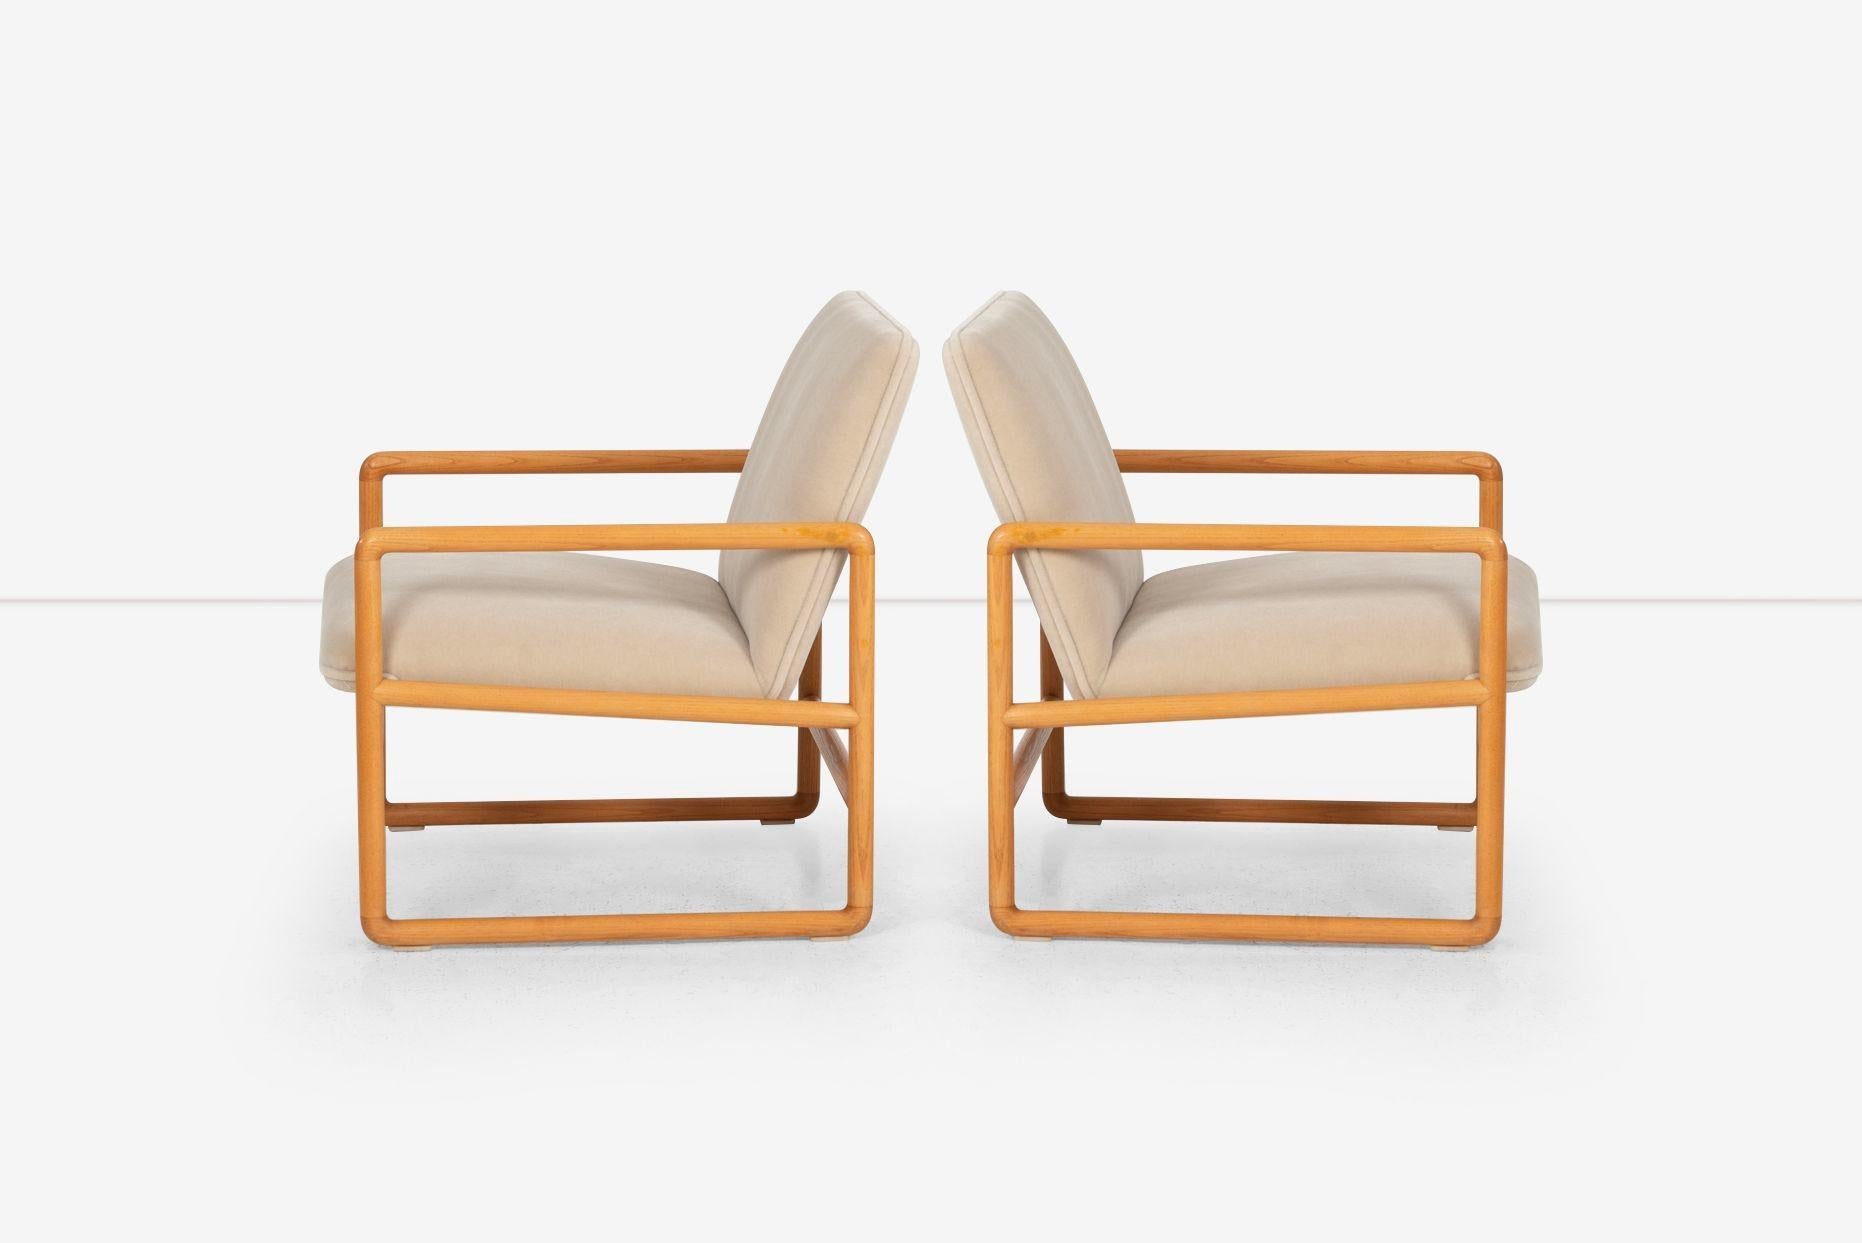 Appliqué Ward Bennett Lounge Chairs in Solid Oak for Brickel Associates 1965c. For Sale